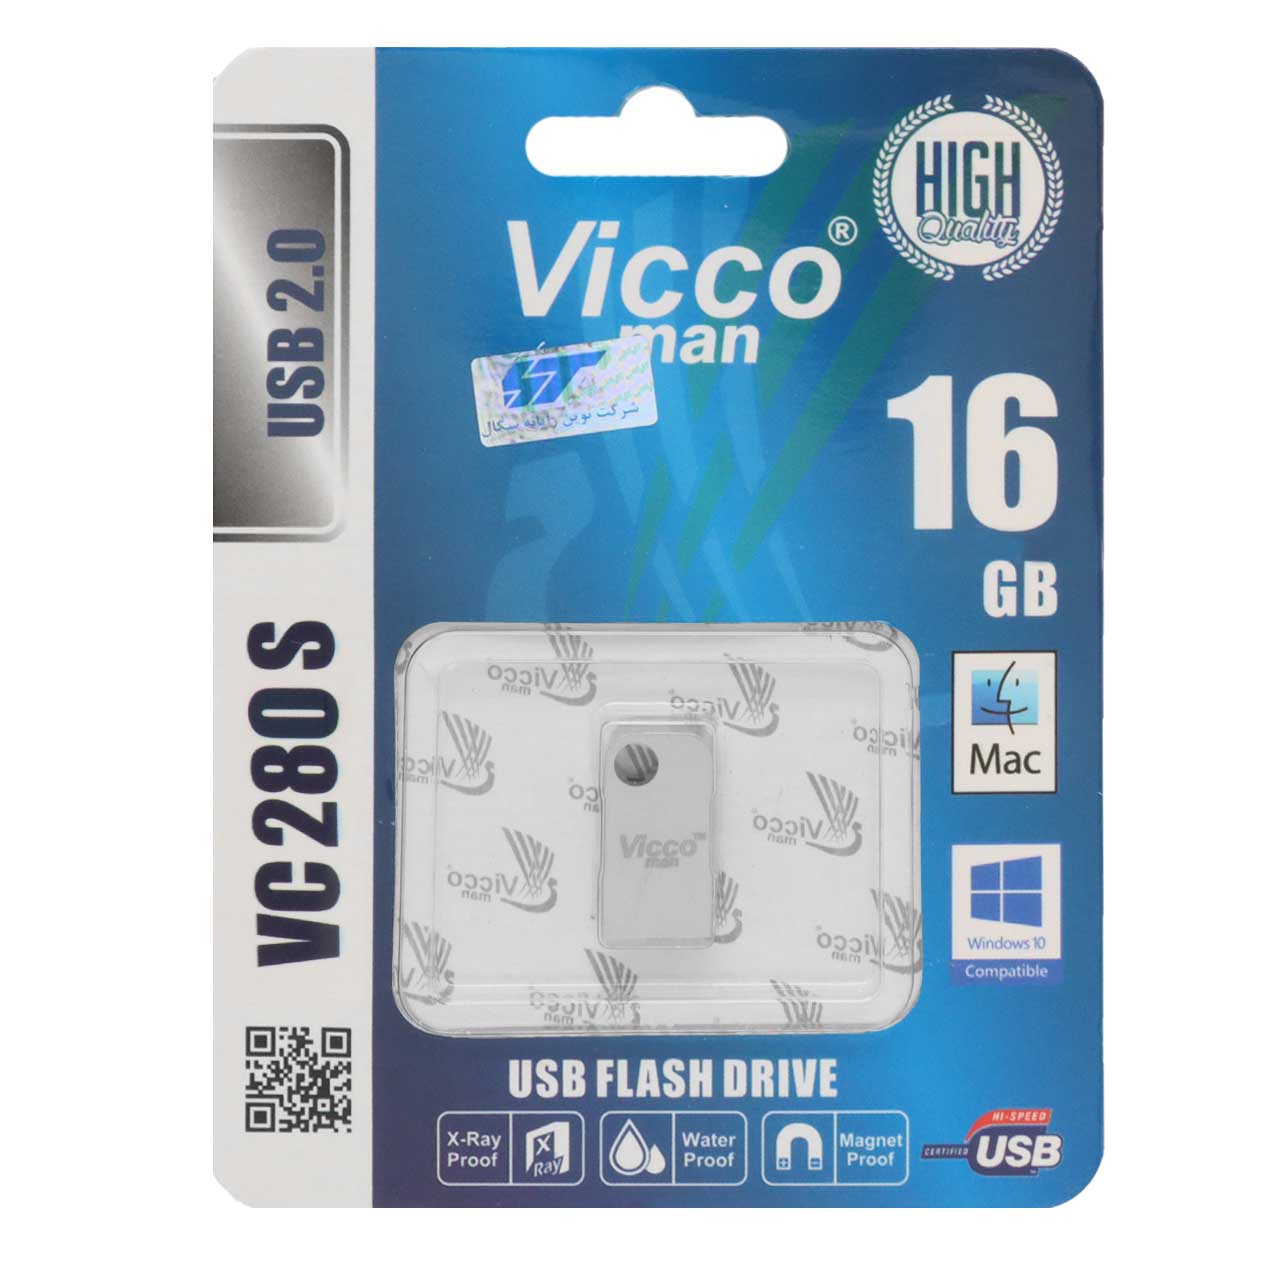 نقره ای Vicco man VC280 S USB2.0 Flash Memory-16GB